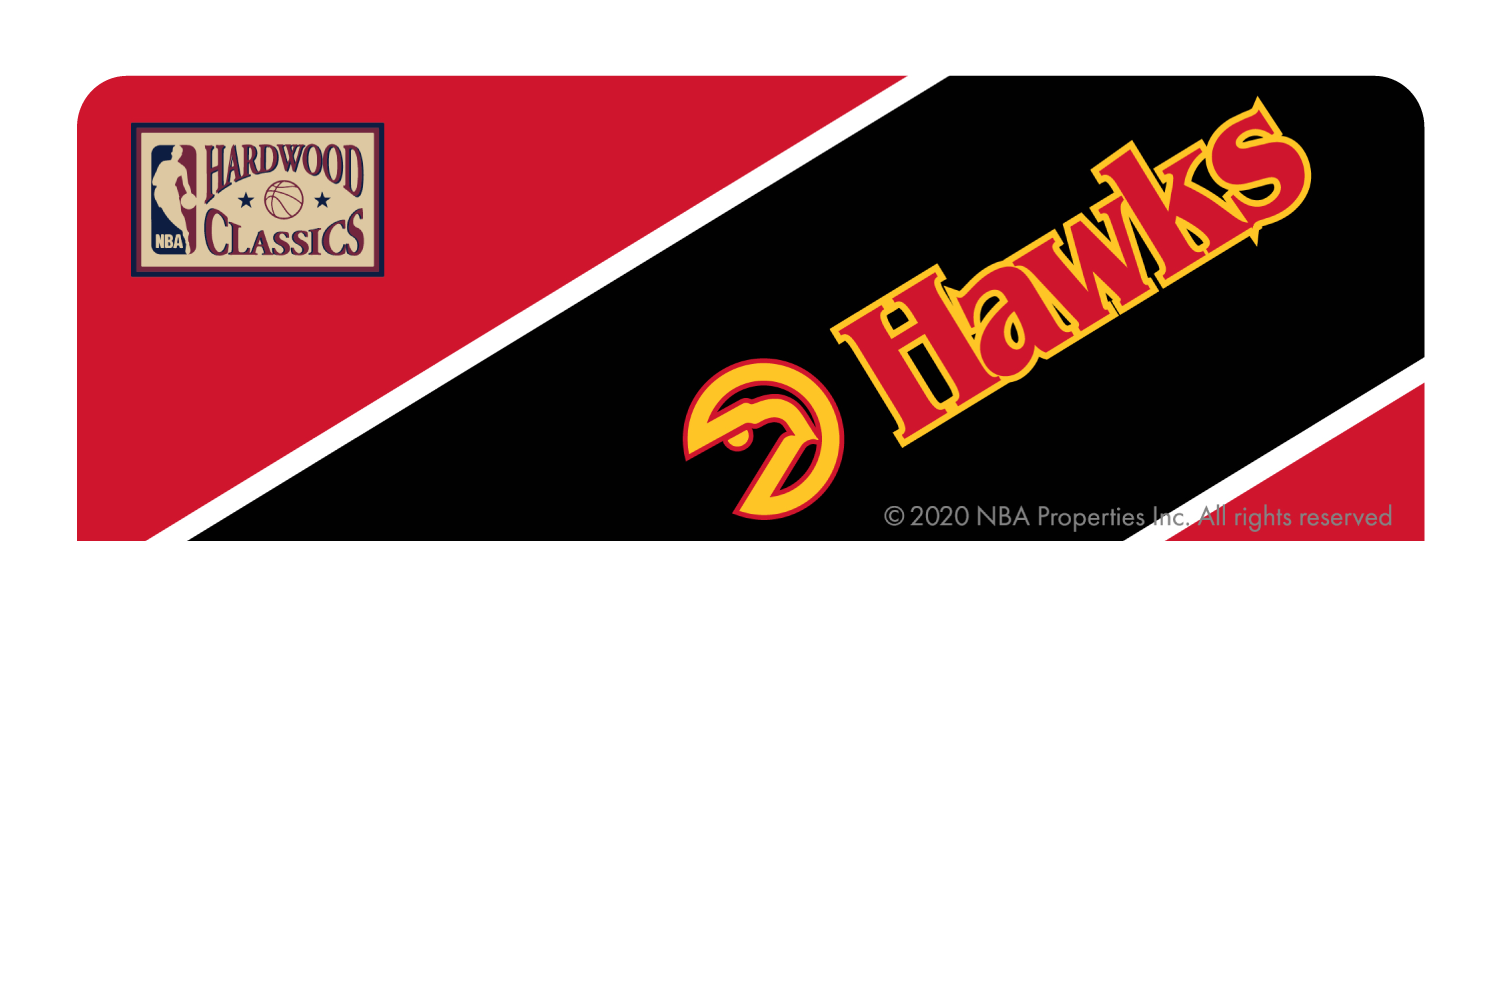 Atlanta Hawks: Uptempo Hardwood Classics